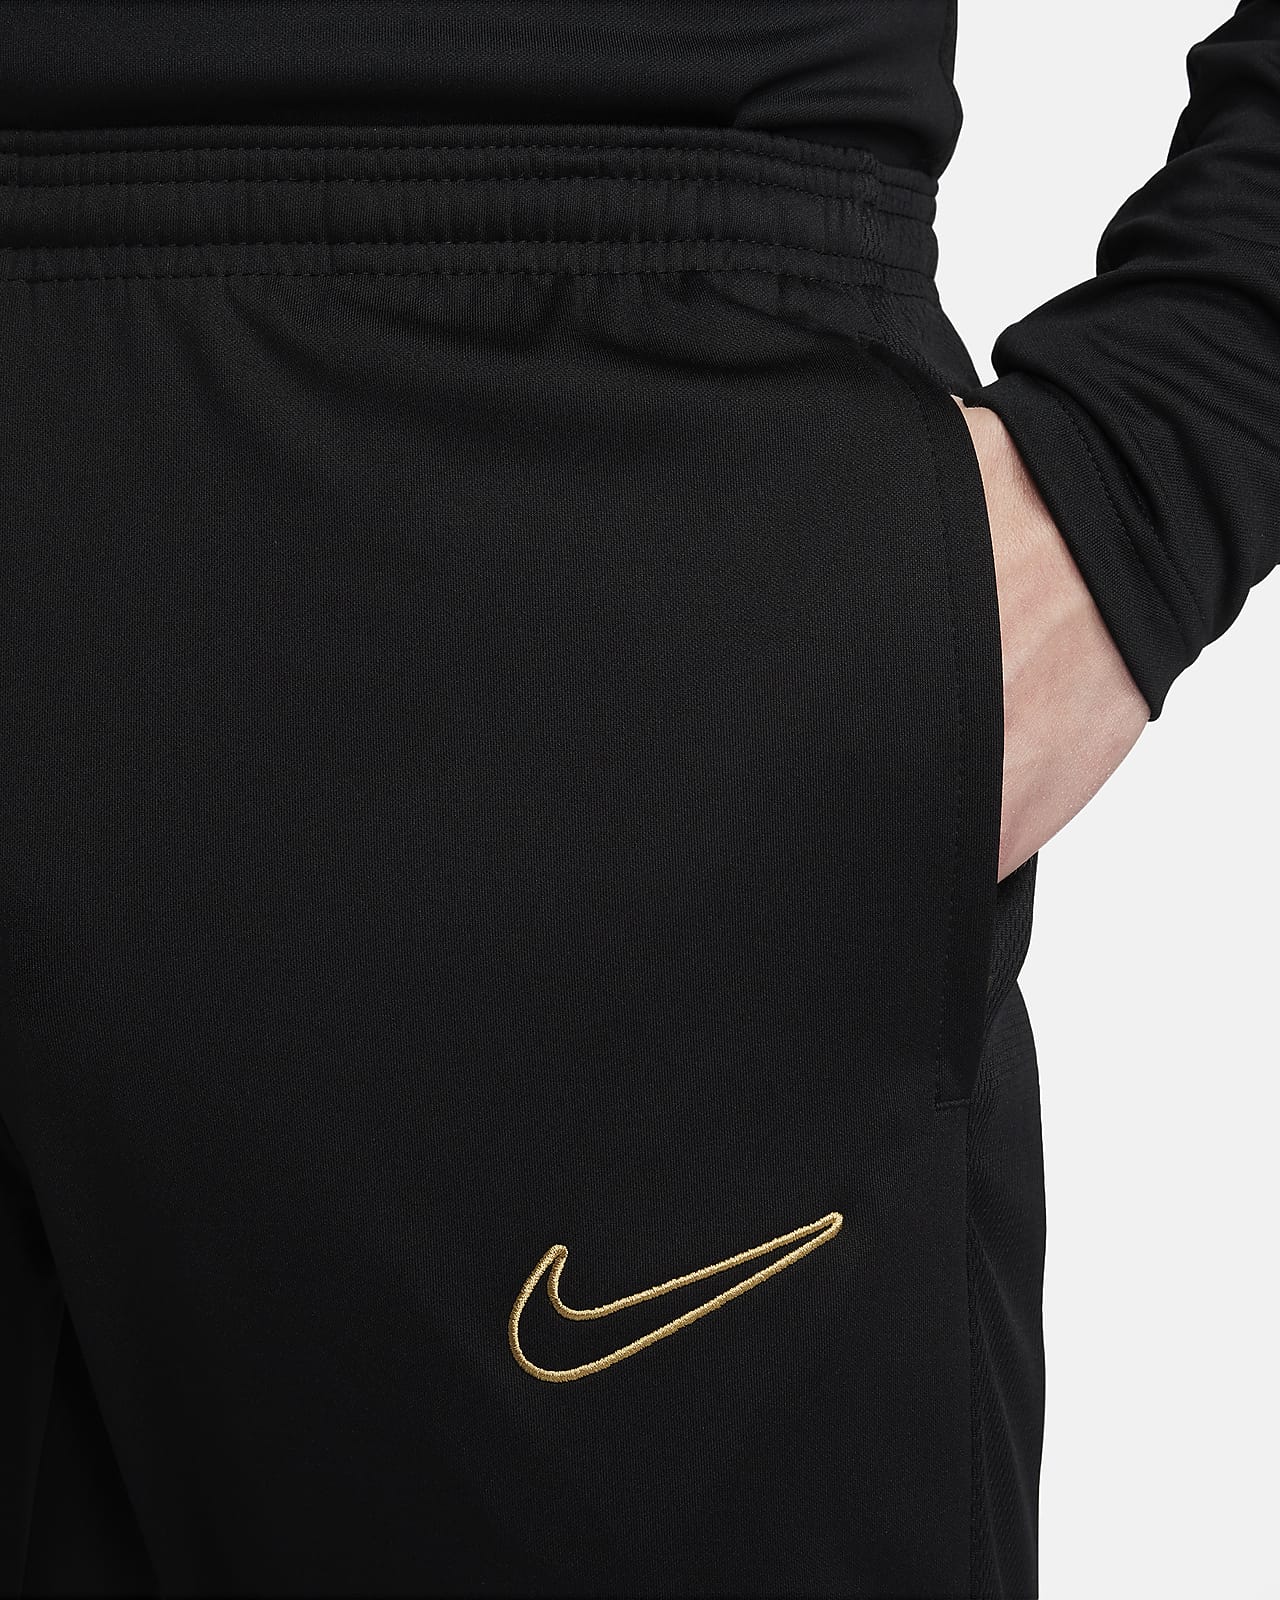  Nike Men's Therma Training Pants (Small, Black/MTLC